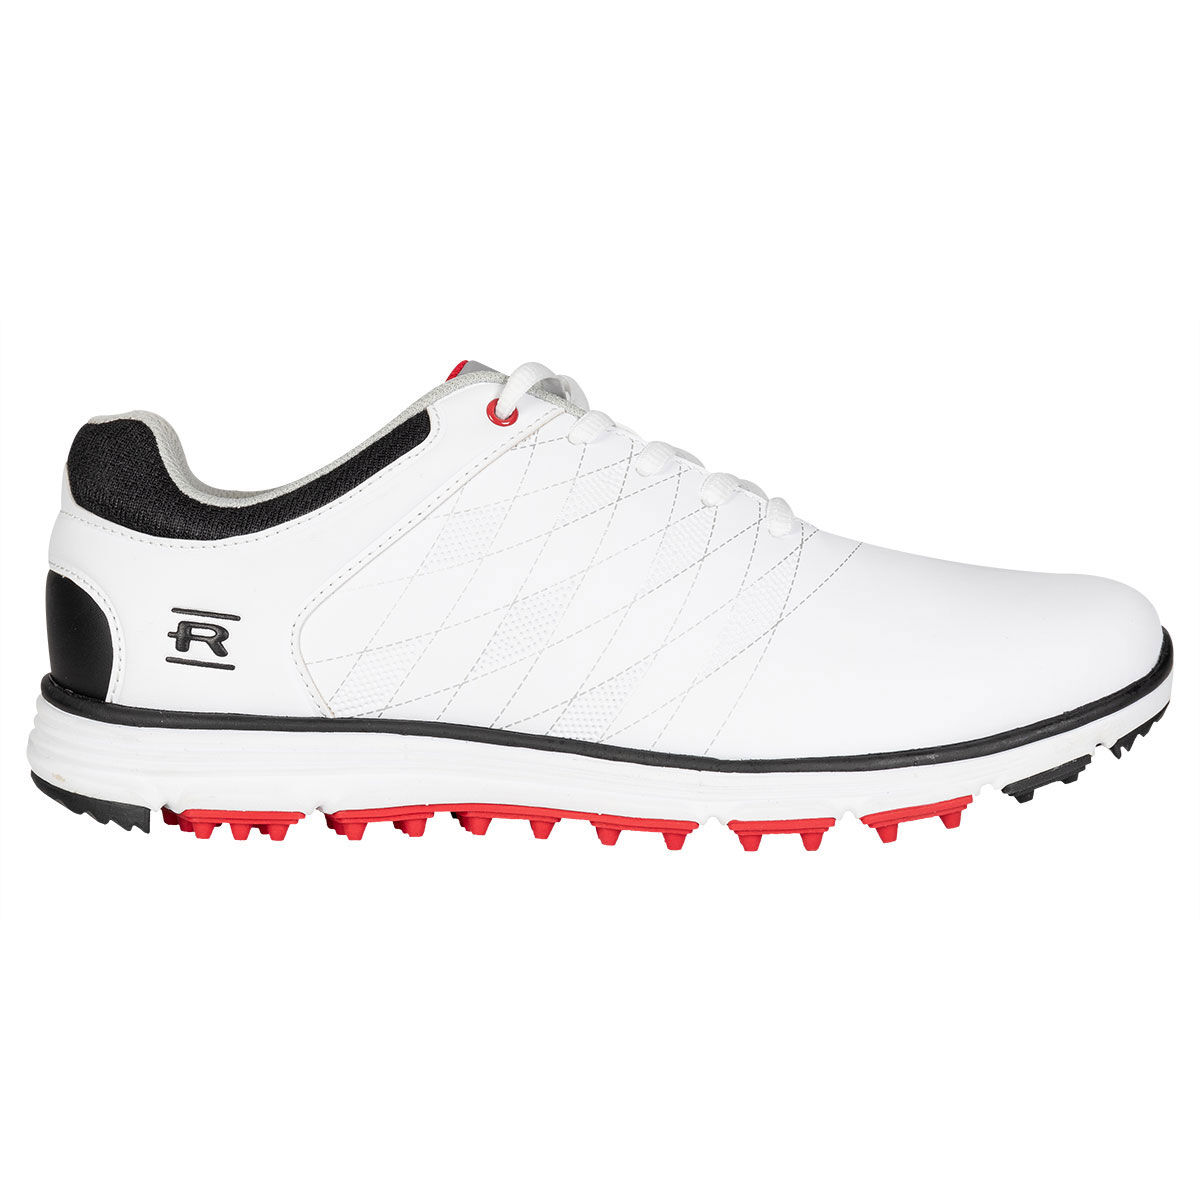 Chaussures Rife RF-02 Blade Spikeless, homme, 7, Blanc/Noir/Rouge, Normal | Online Golf